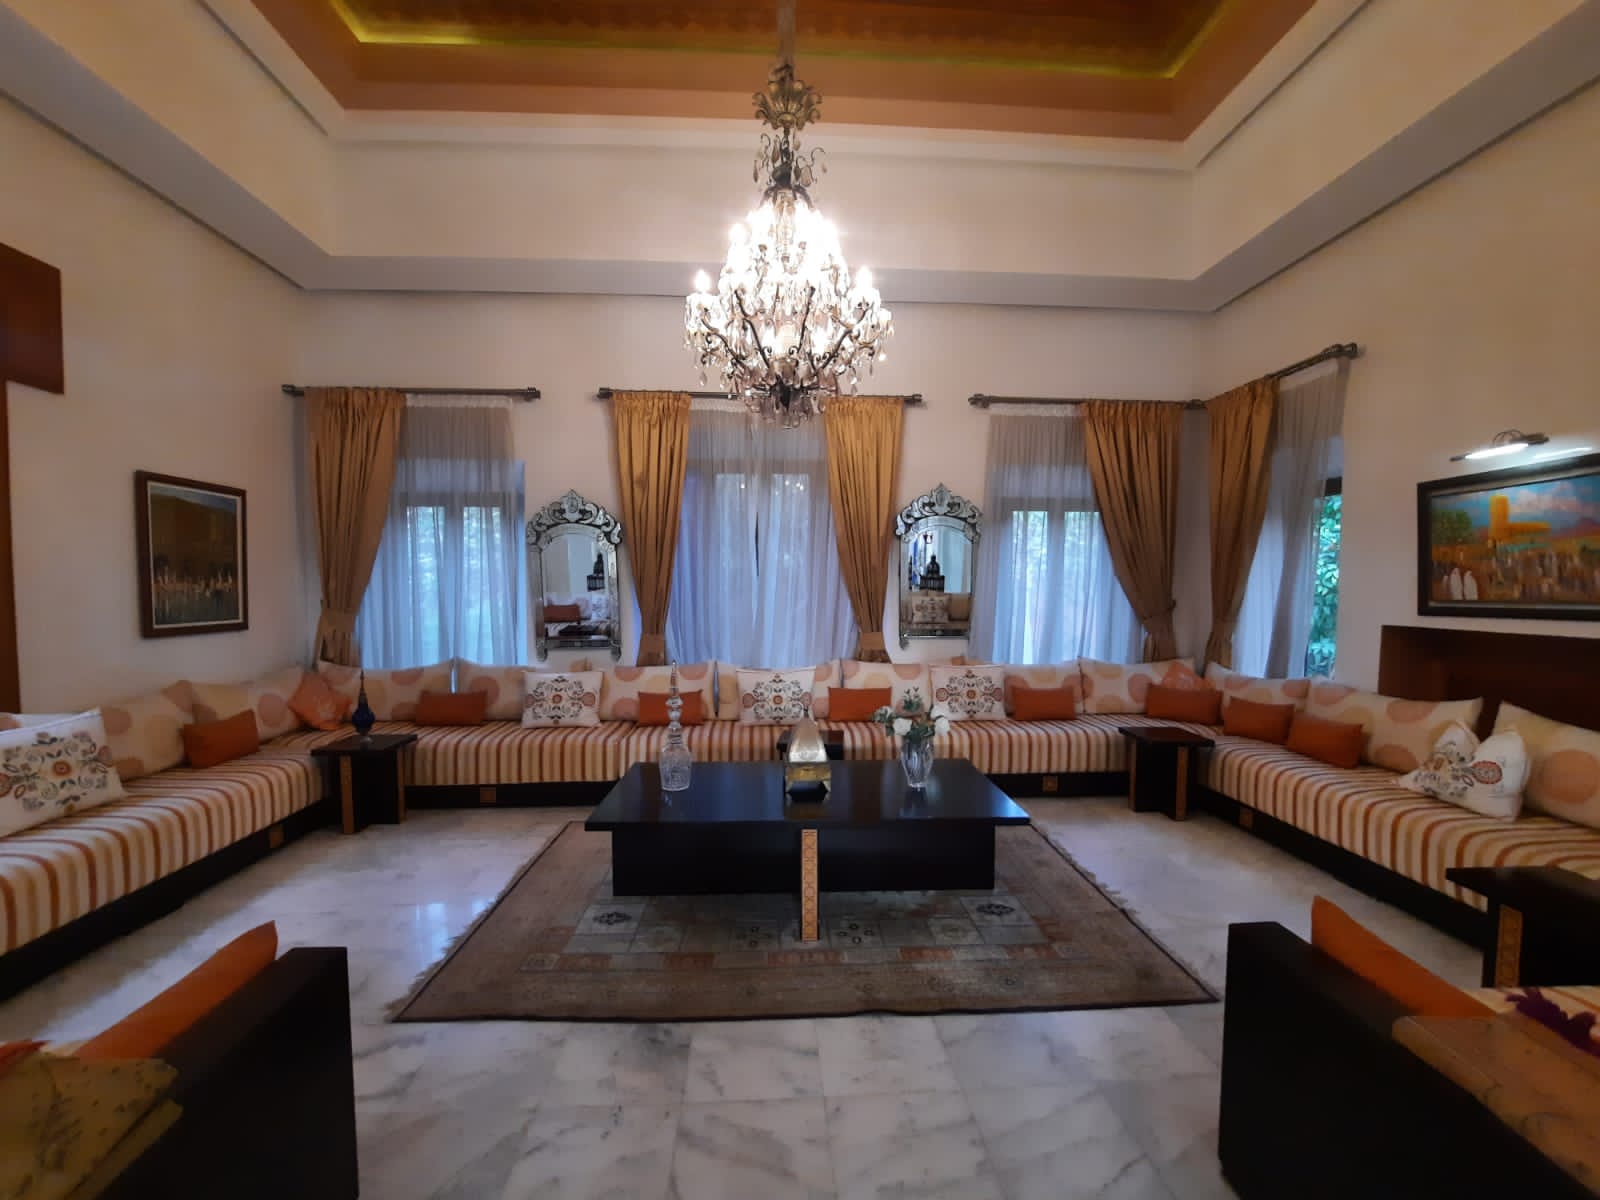 Villa for Sale 15 500 000 dh 800 sqm, 4 rooms - Hivernage Marrakech